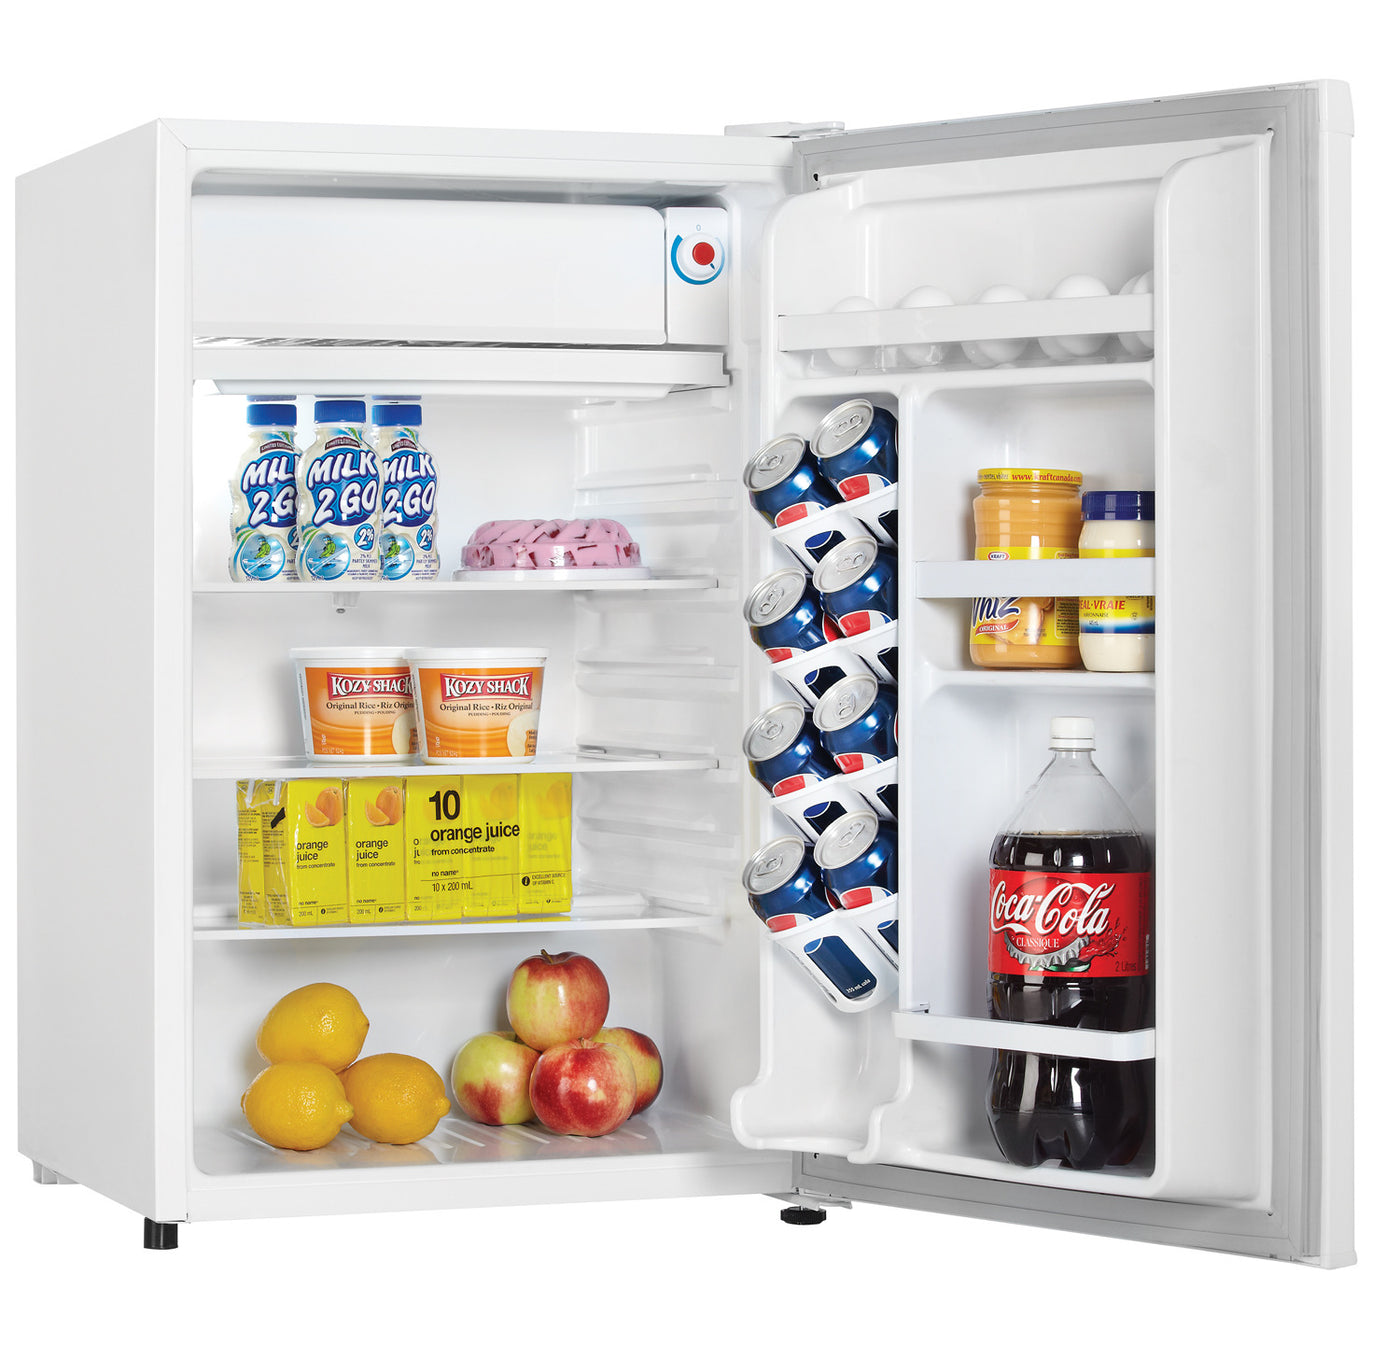 Danby White Compact Refrigerator (4.4 Cu. Ft.) - DCR044A2WDD